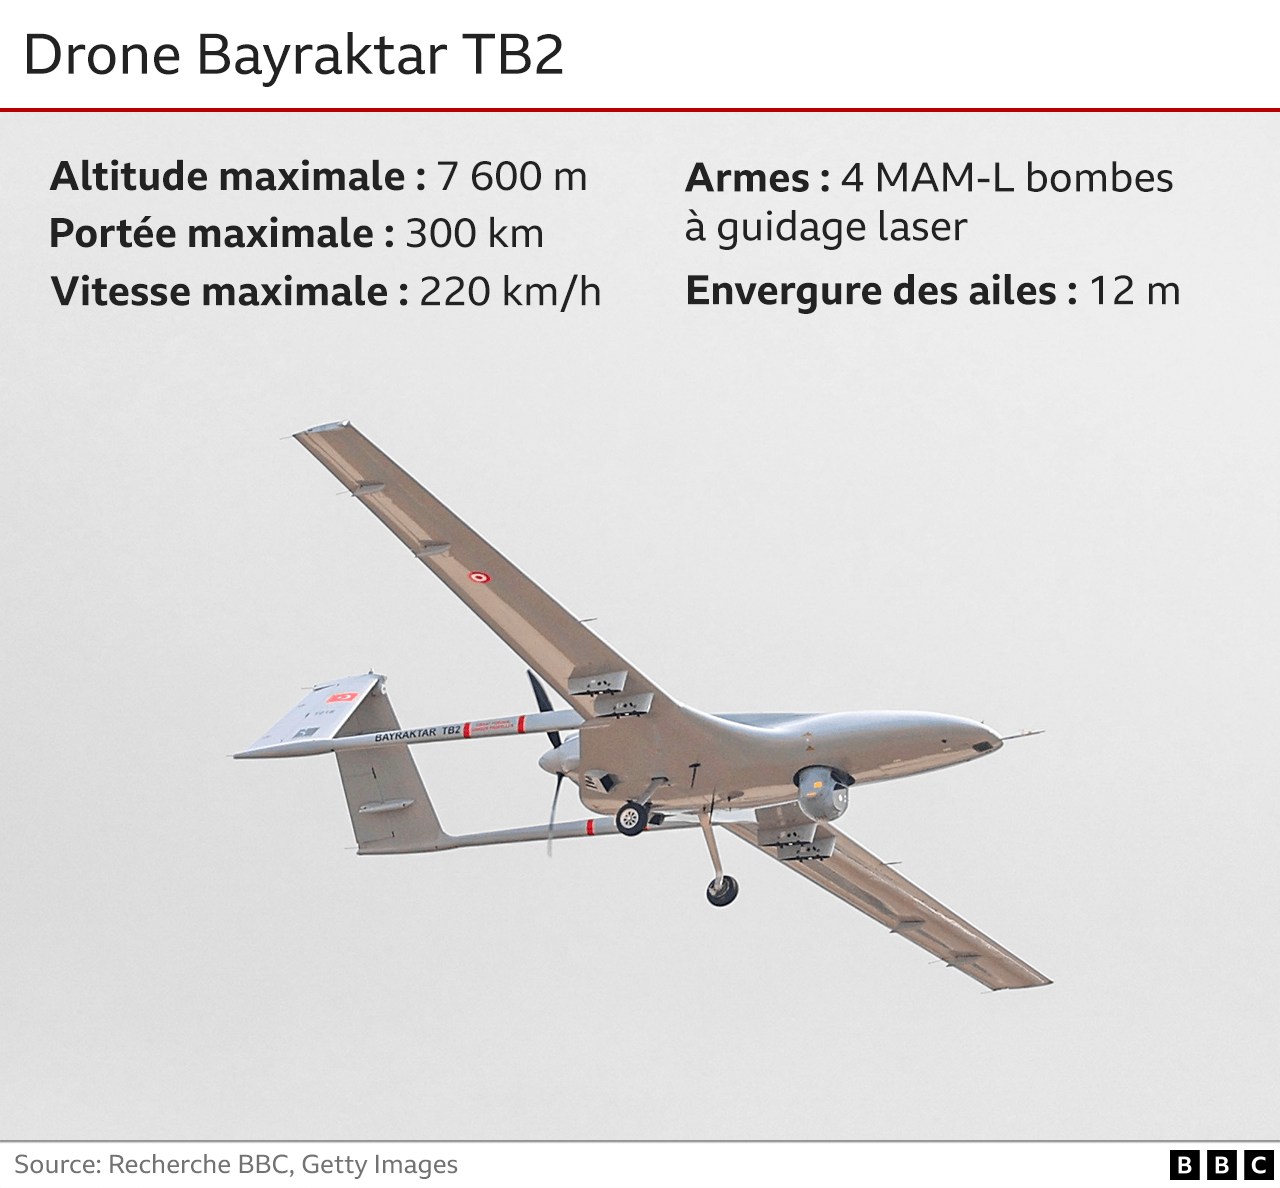 Le drone de fabrication turc Bayraktar.